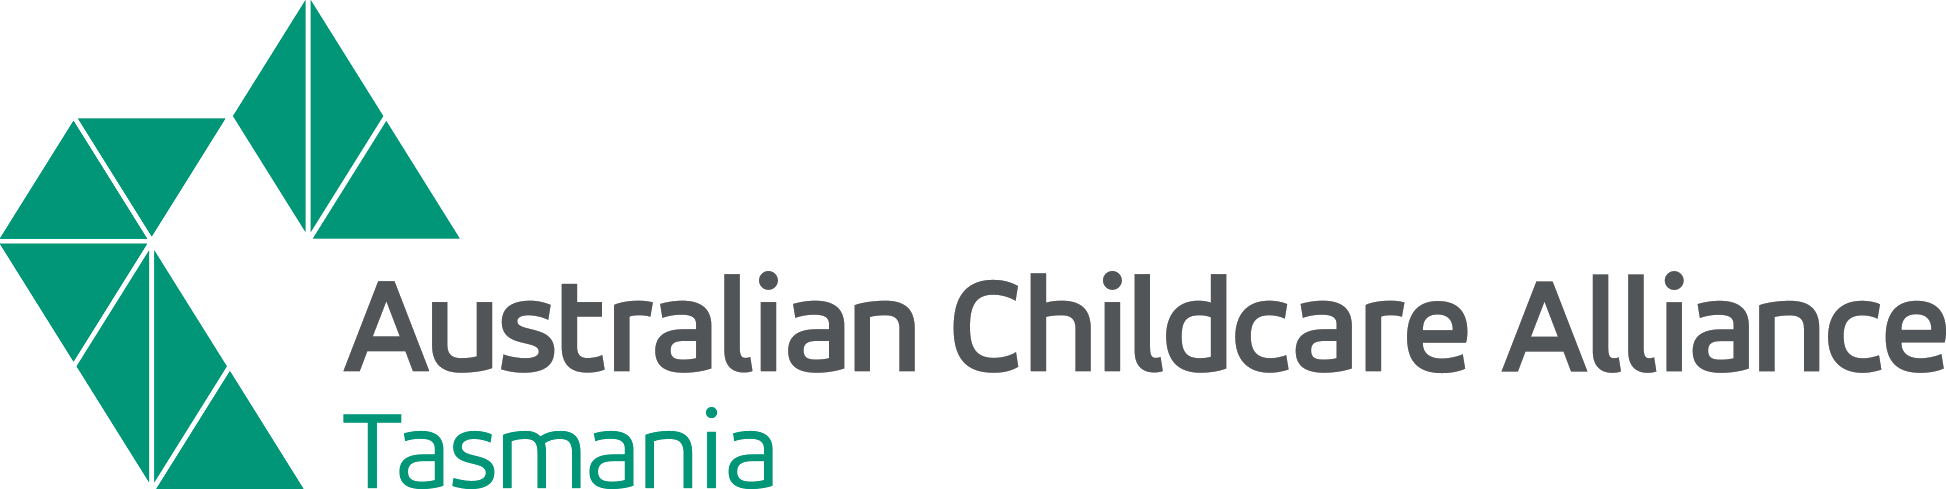 Australian Childcare Alliance Tasmania